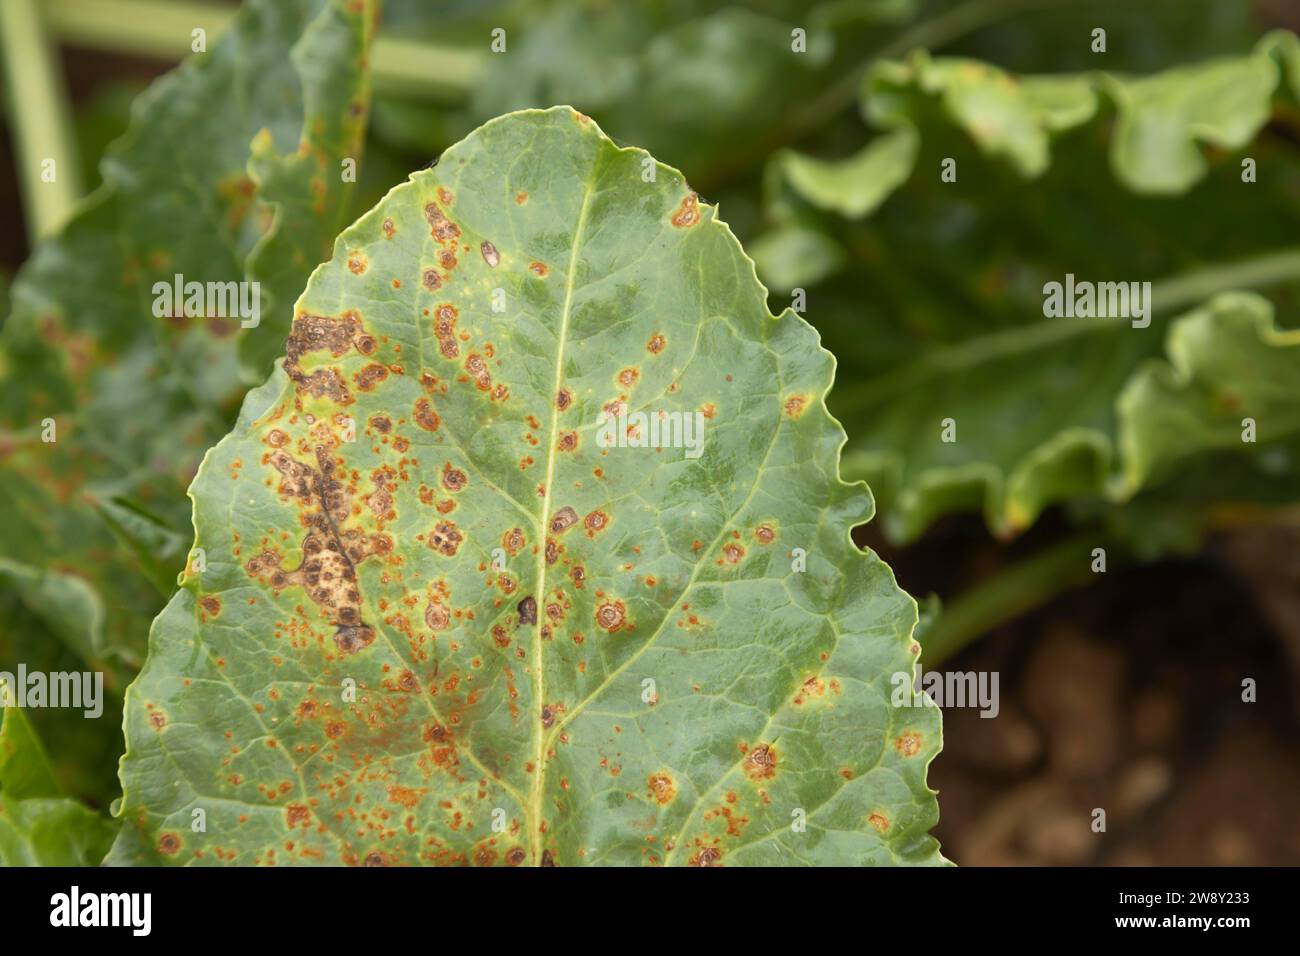 Sugar beet (Beta vulgaris) crop leaf infected with Rust (Uromyces beticola) foliar disease in an agricultural arable field, England, United Kingdom Stock Photo